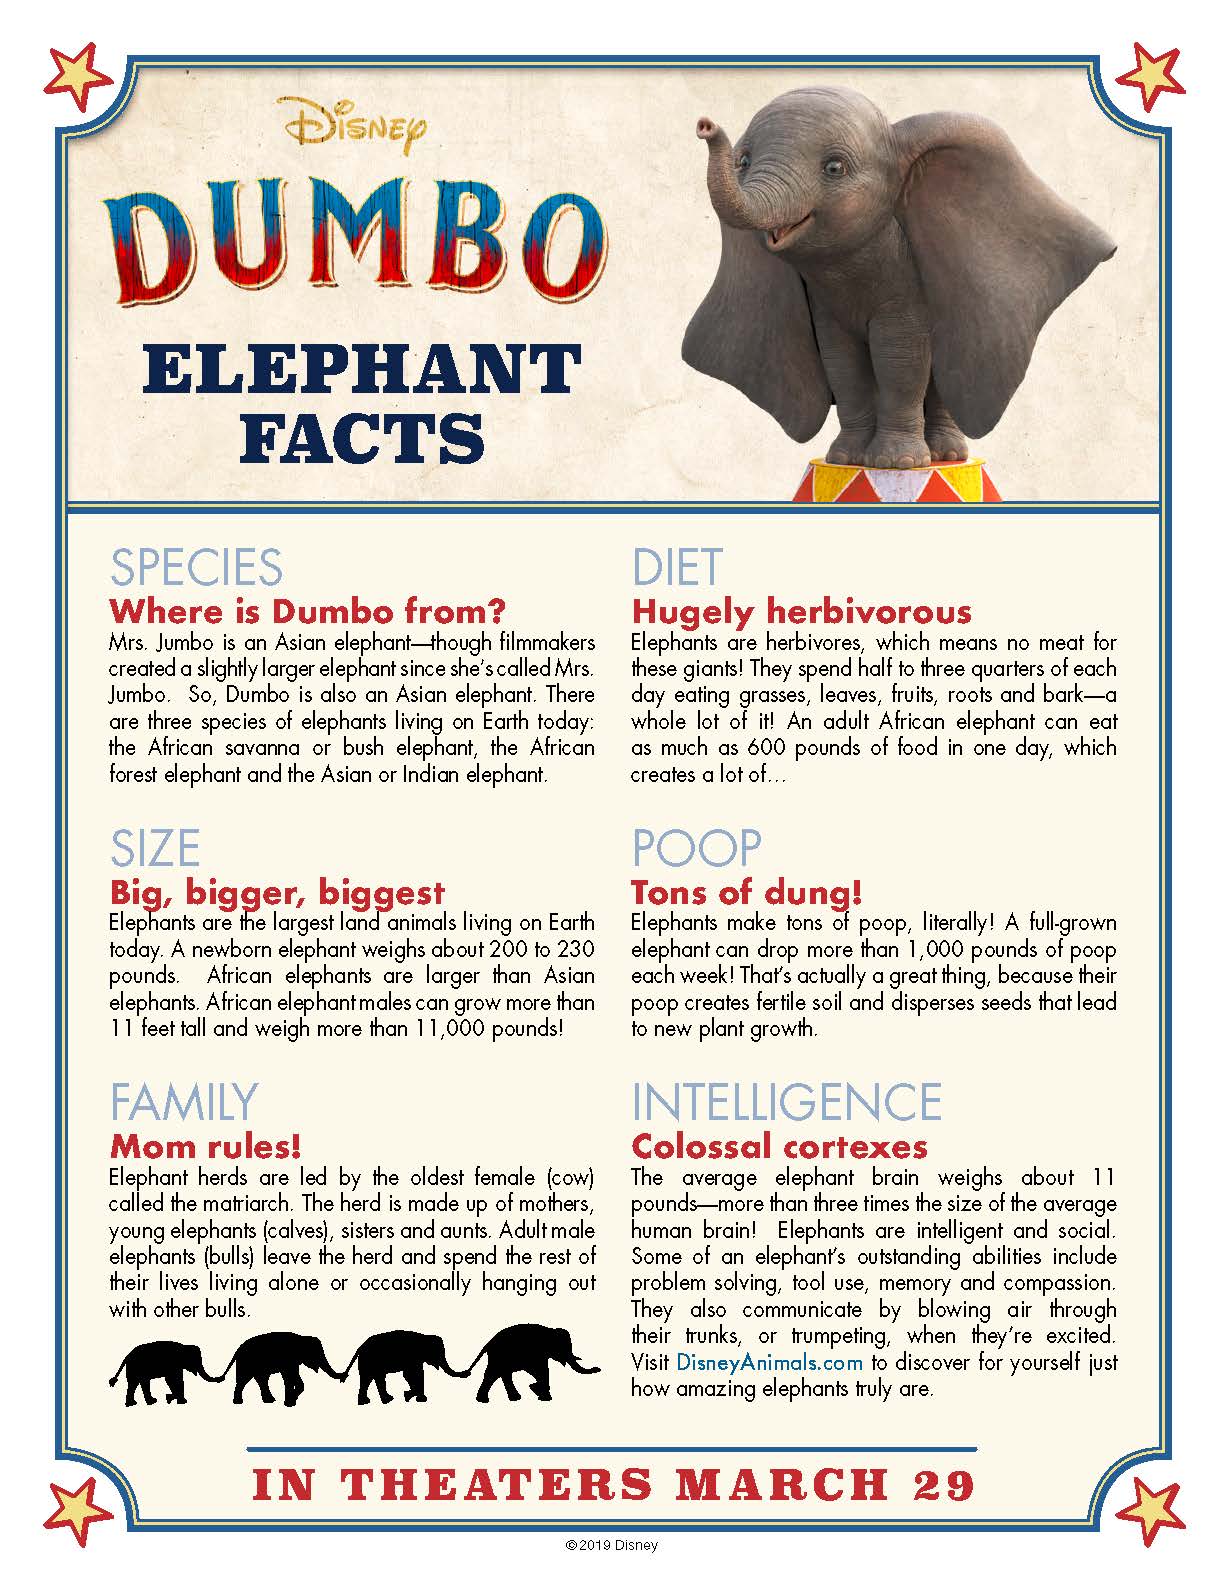 Dumbo Elephant Fun Facts from Disney - Free Educational Printable #elephant #disney #dumbo #freeprintable